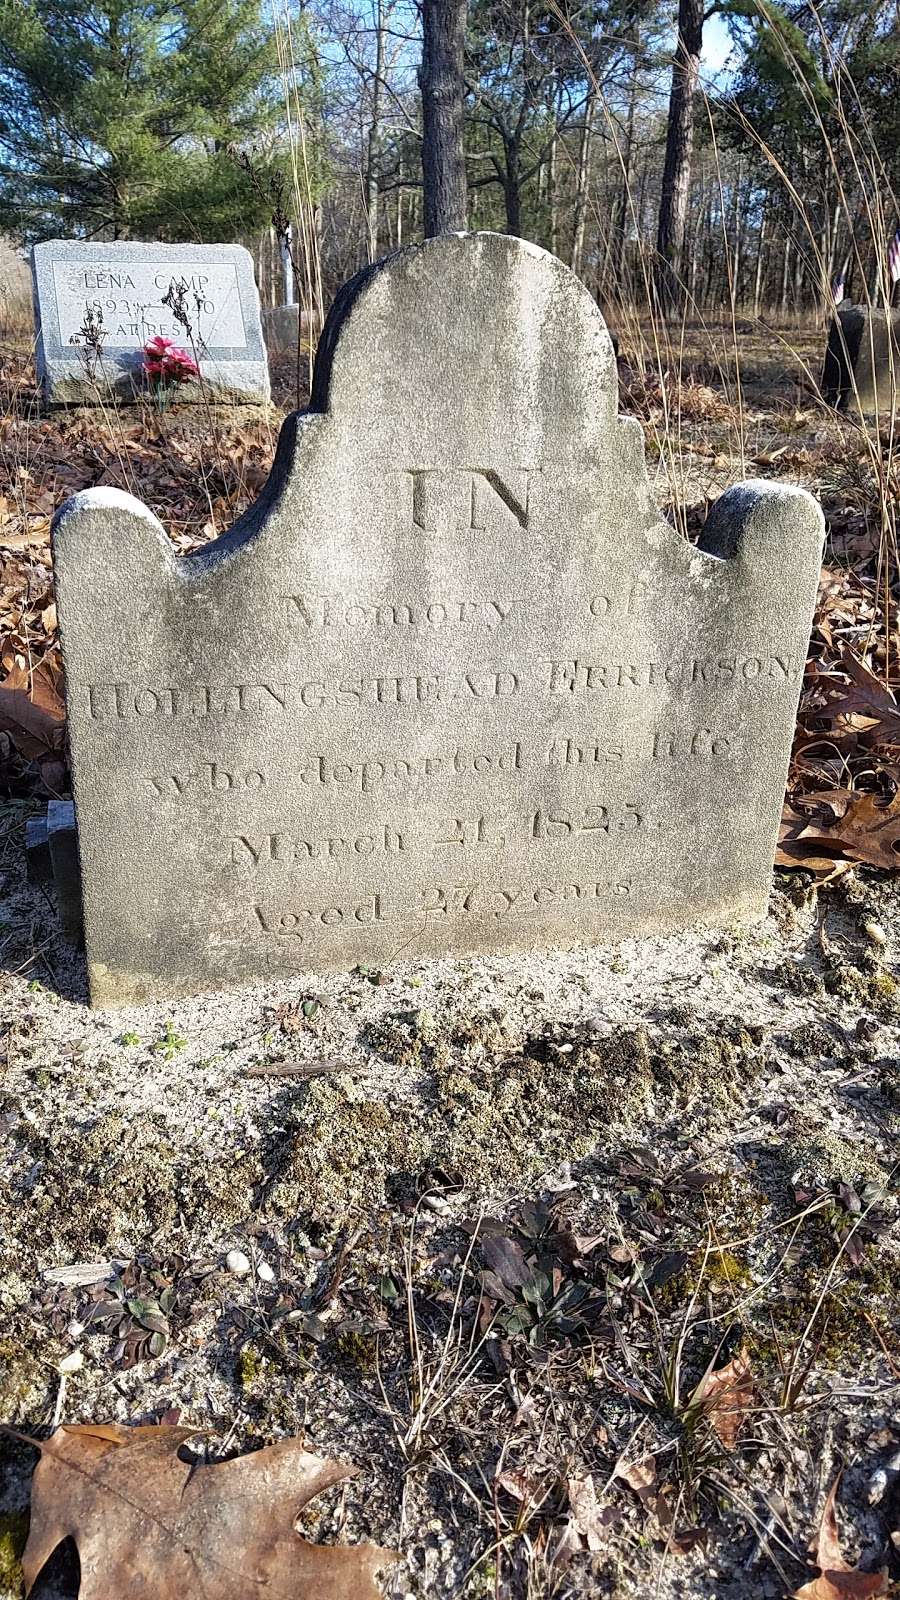 West Creek Baptist Cemetery | NJ-347, Delmont, NJ 08314, USA | Phone: (856) 785-0457